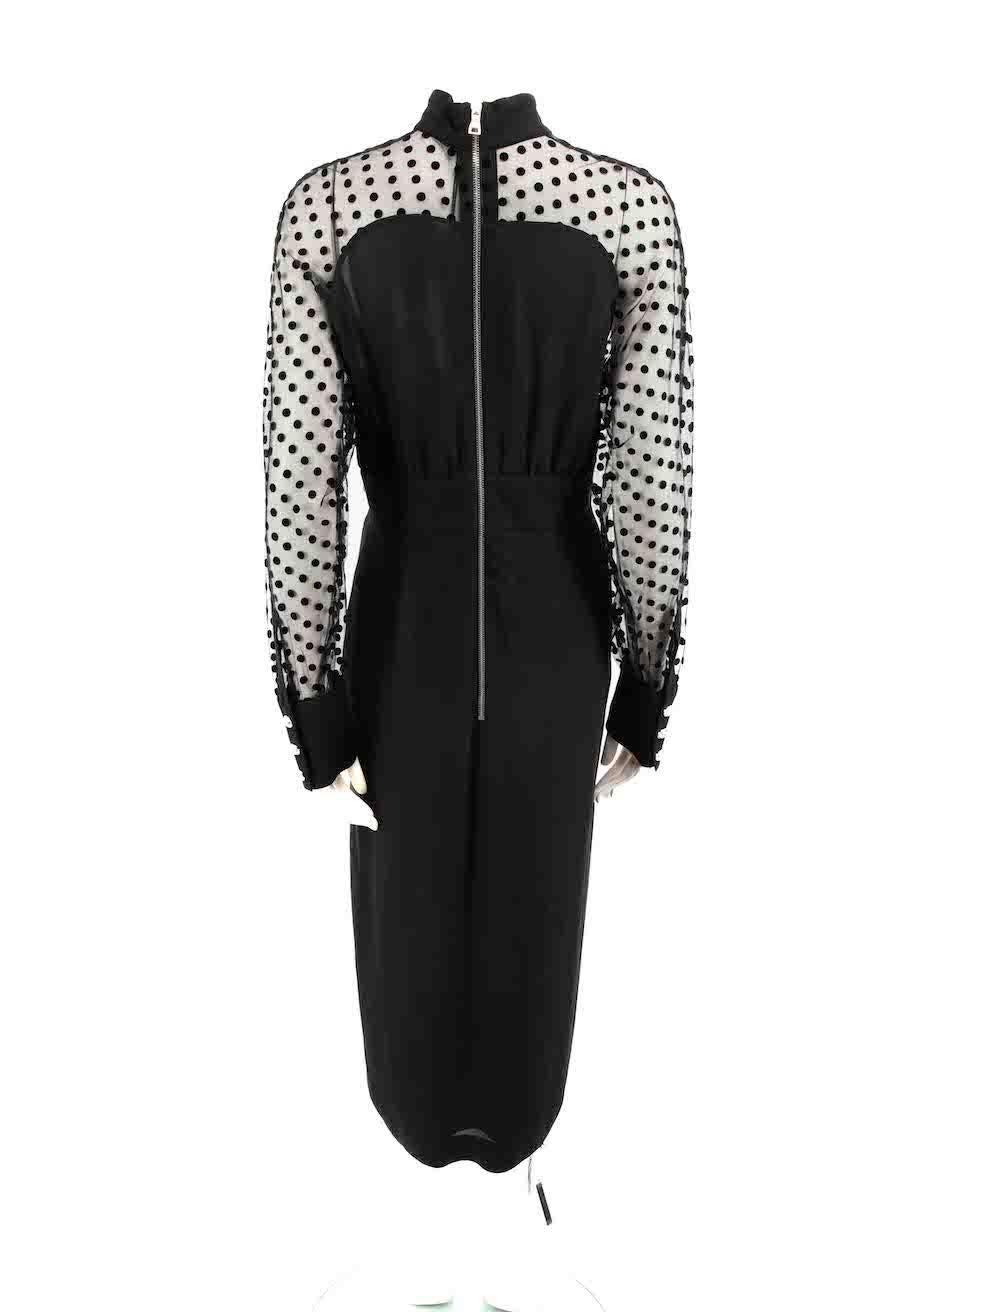 Balmain Black Silk Polka Dot Sleeve Dress Size L In New Condition For Sale In London, GB